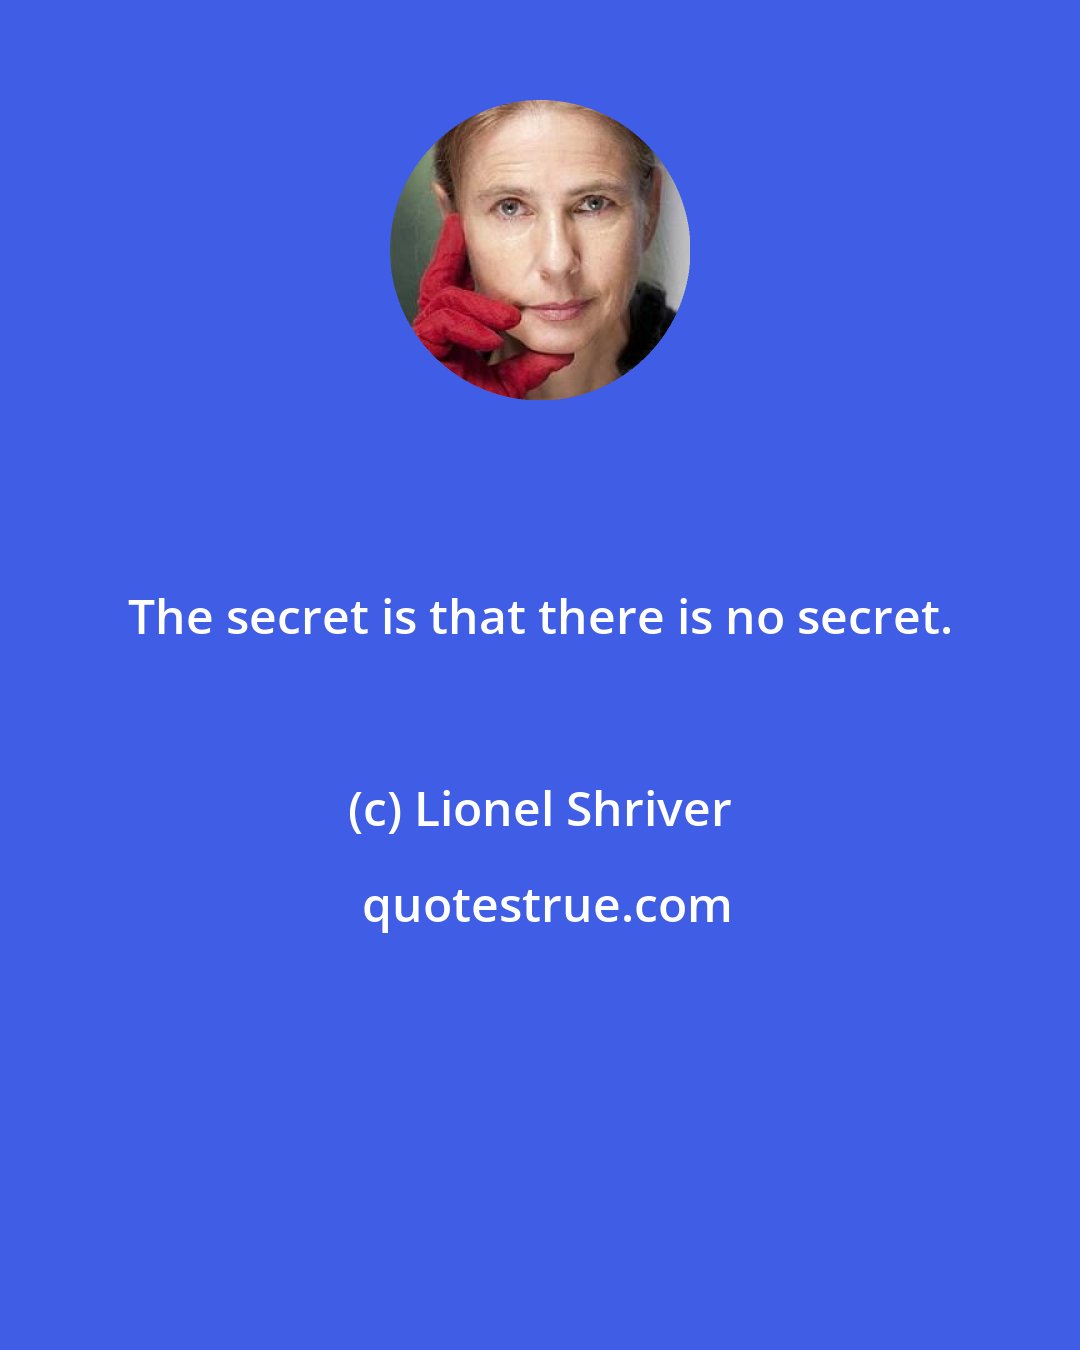 Lionel Shriver: The secret is that there is no secret.